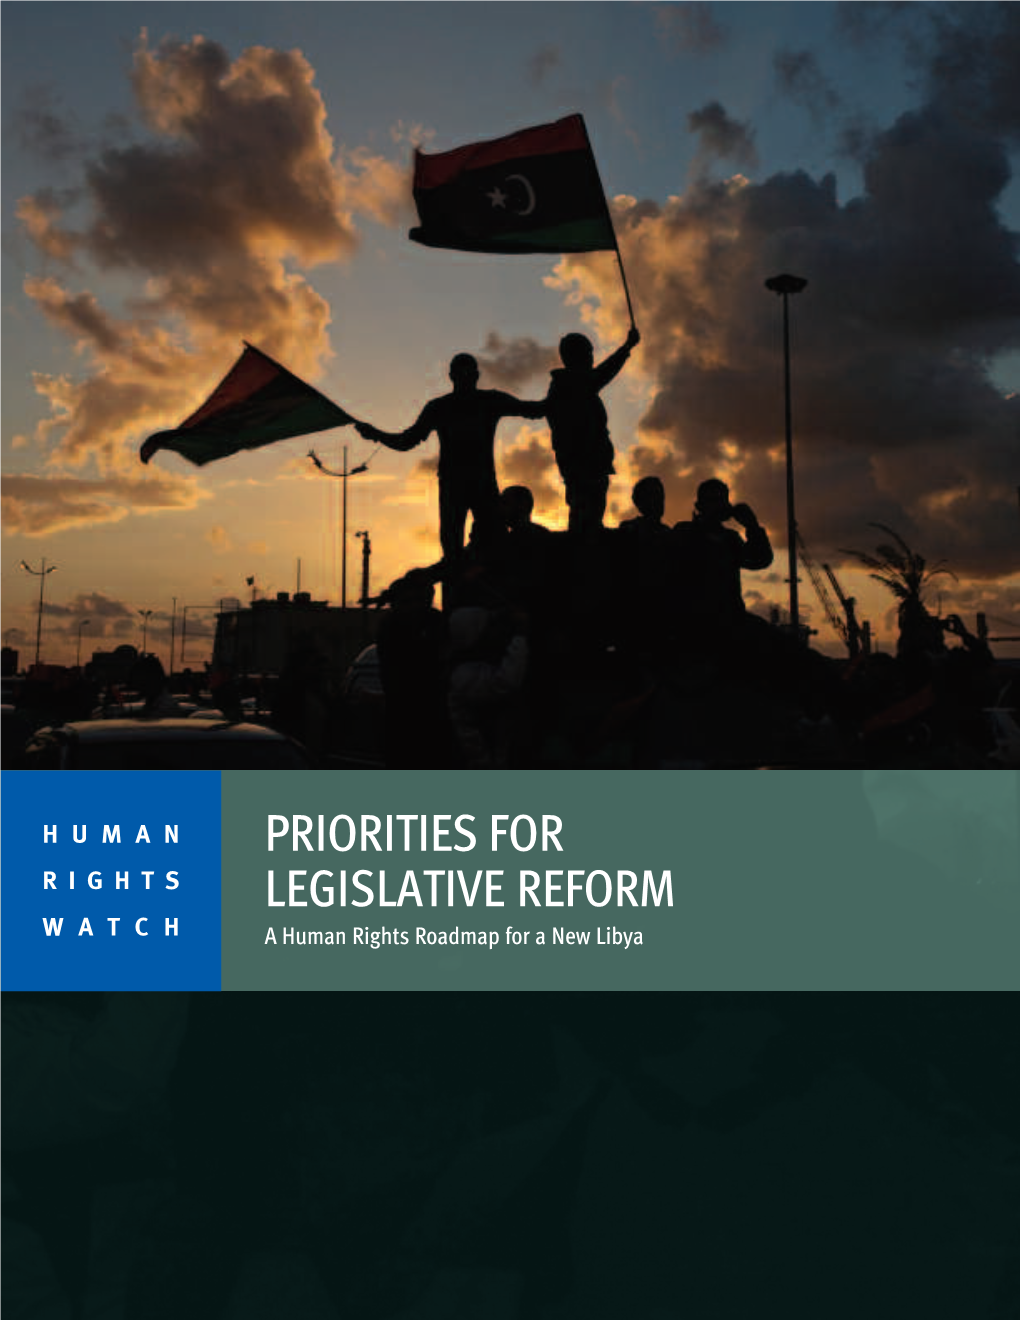 A Human Rights Roadmap for a New Libya